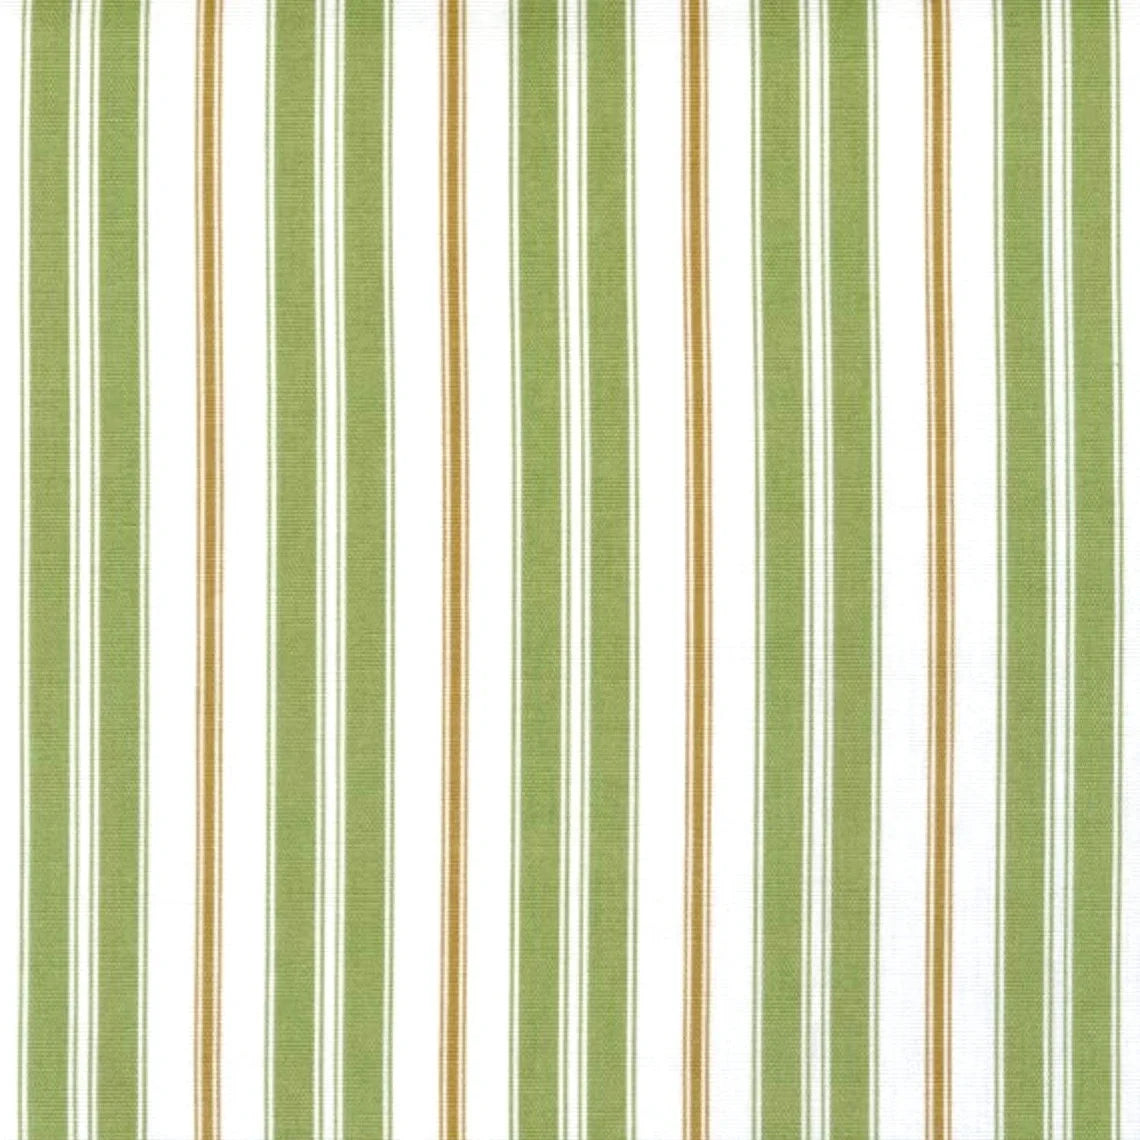 gathered bedskirt in newbury aloe green stripe- green, brown, white